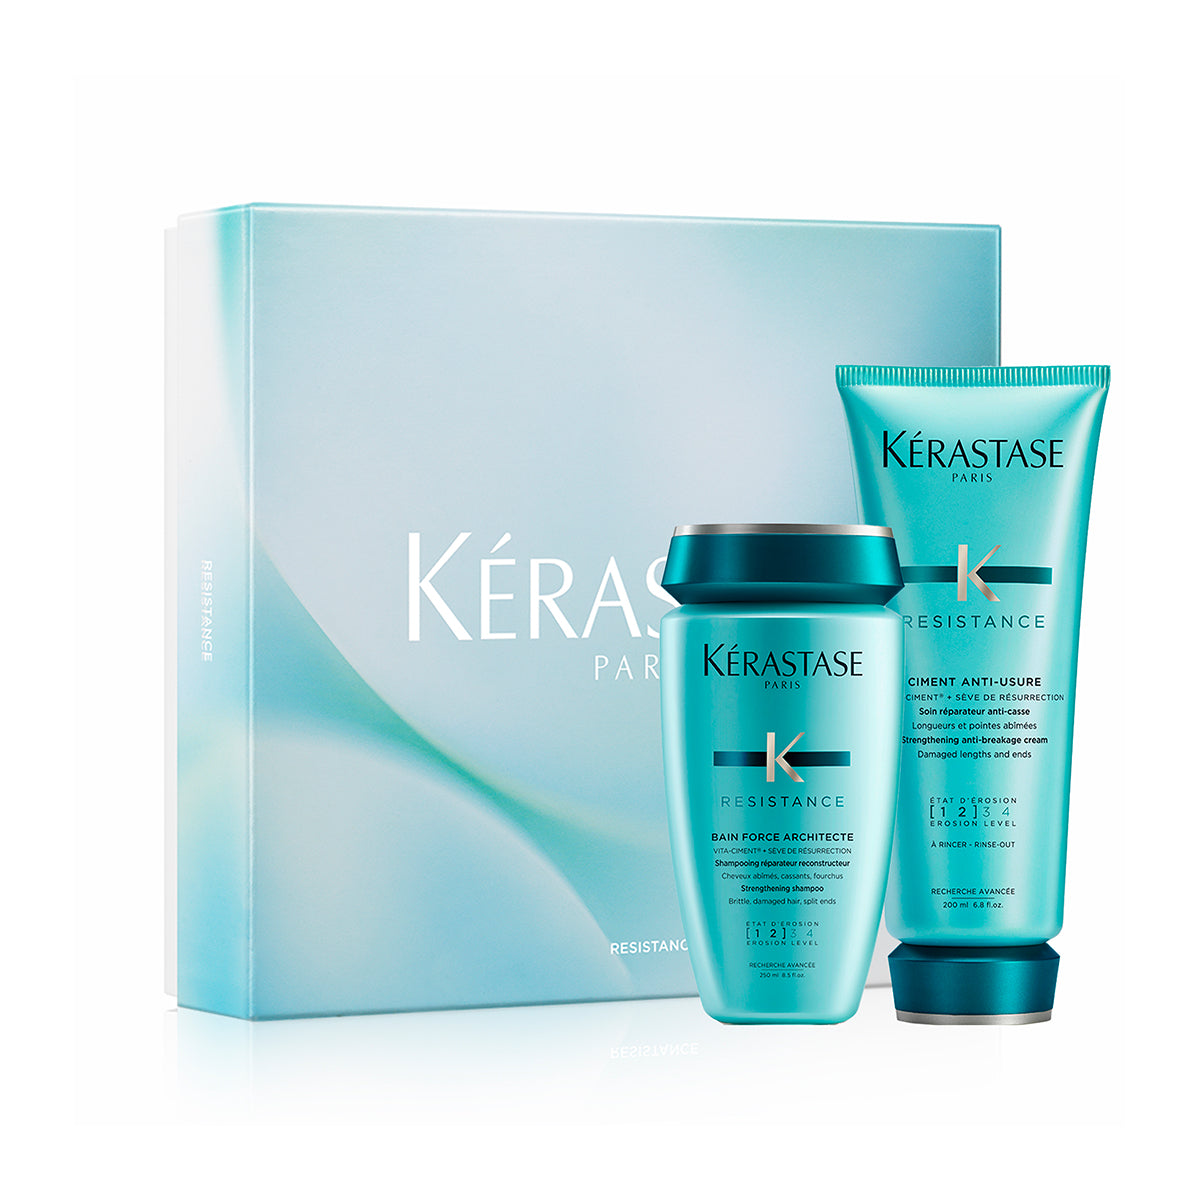 Kerastase Resistance Limited Edition Σετ Περιποίησης για Ταλαιπωρημένα Μαλλιά (Σαμπουάν 250ml, Conditioner 200ml)